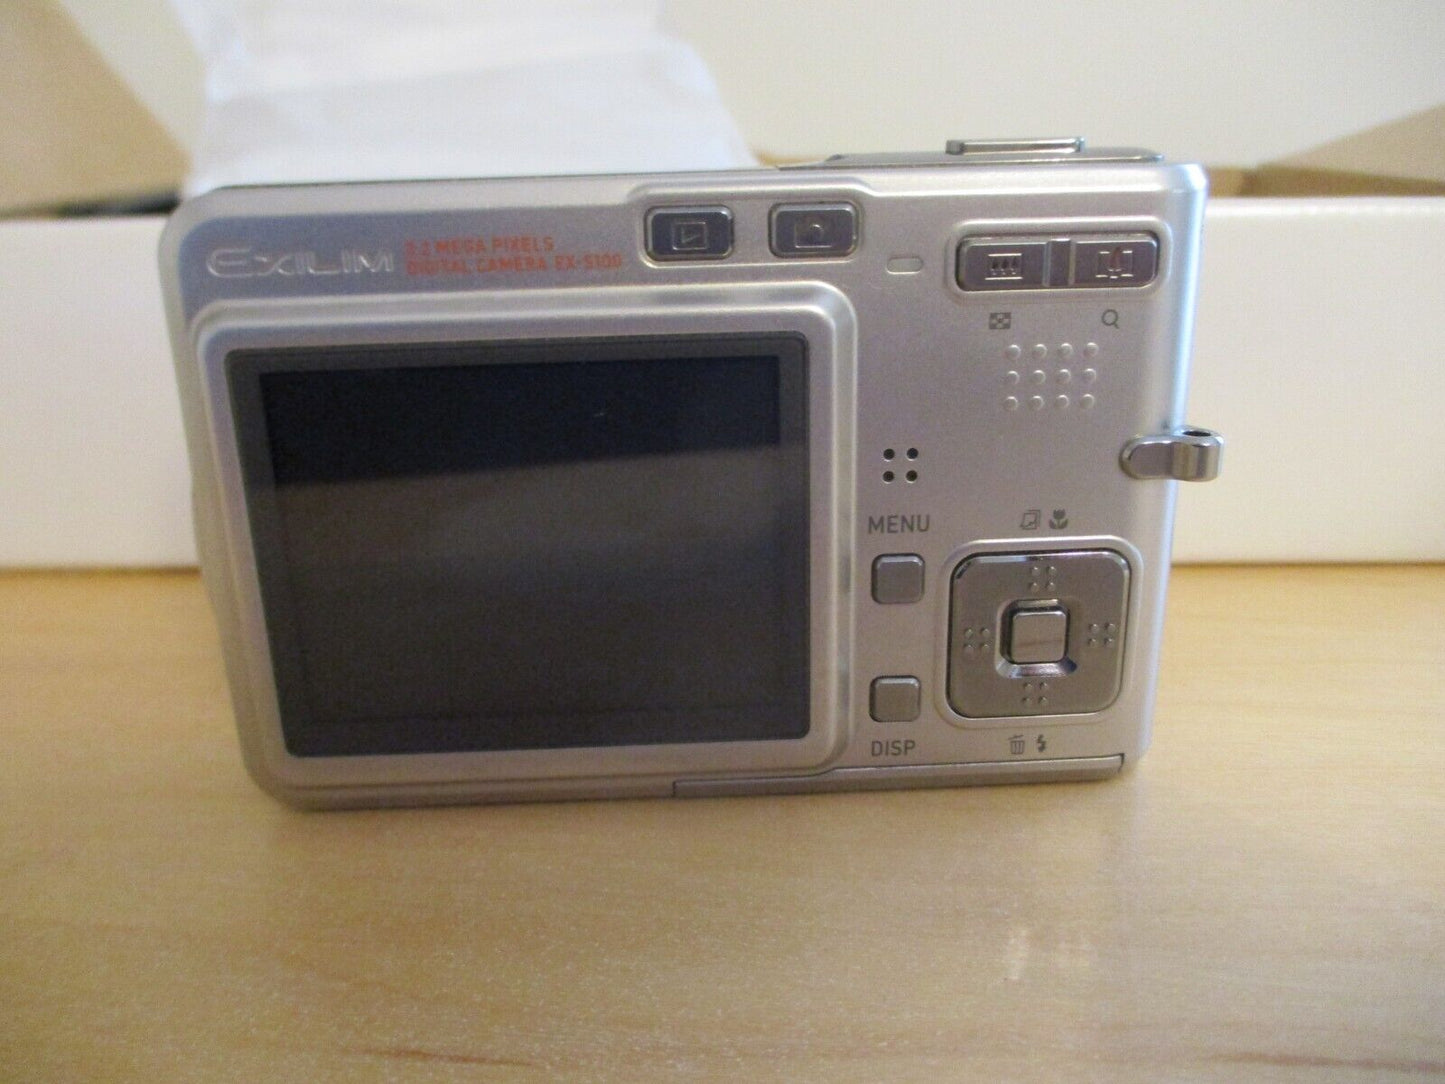 Casio EXILIM EX-S100 3.2 MP Digital Camera New in Original Box